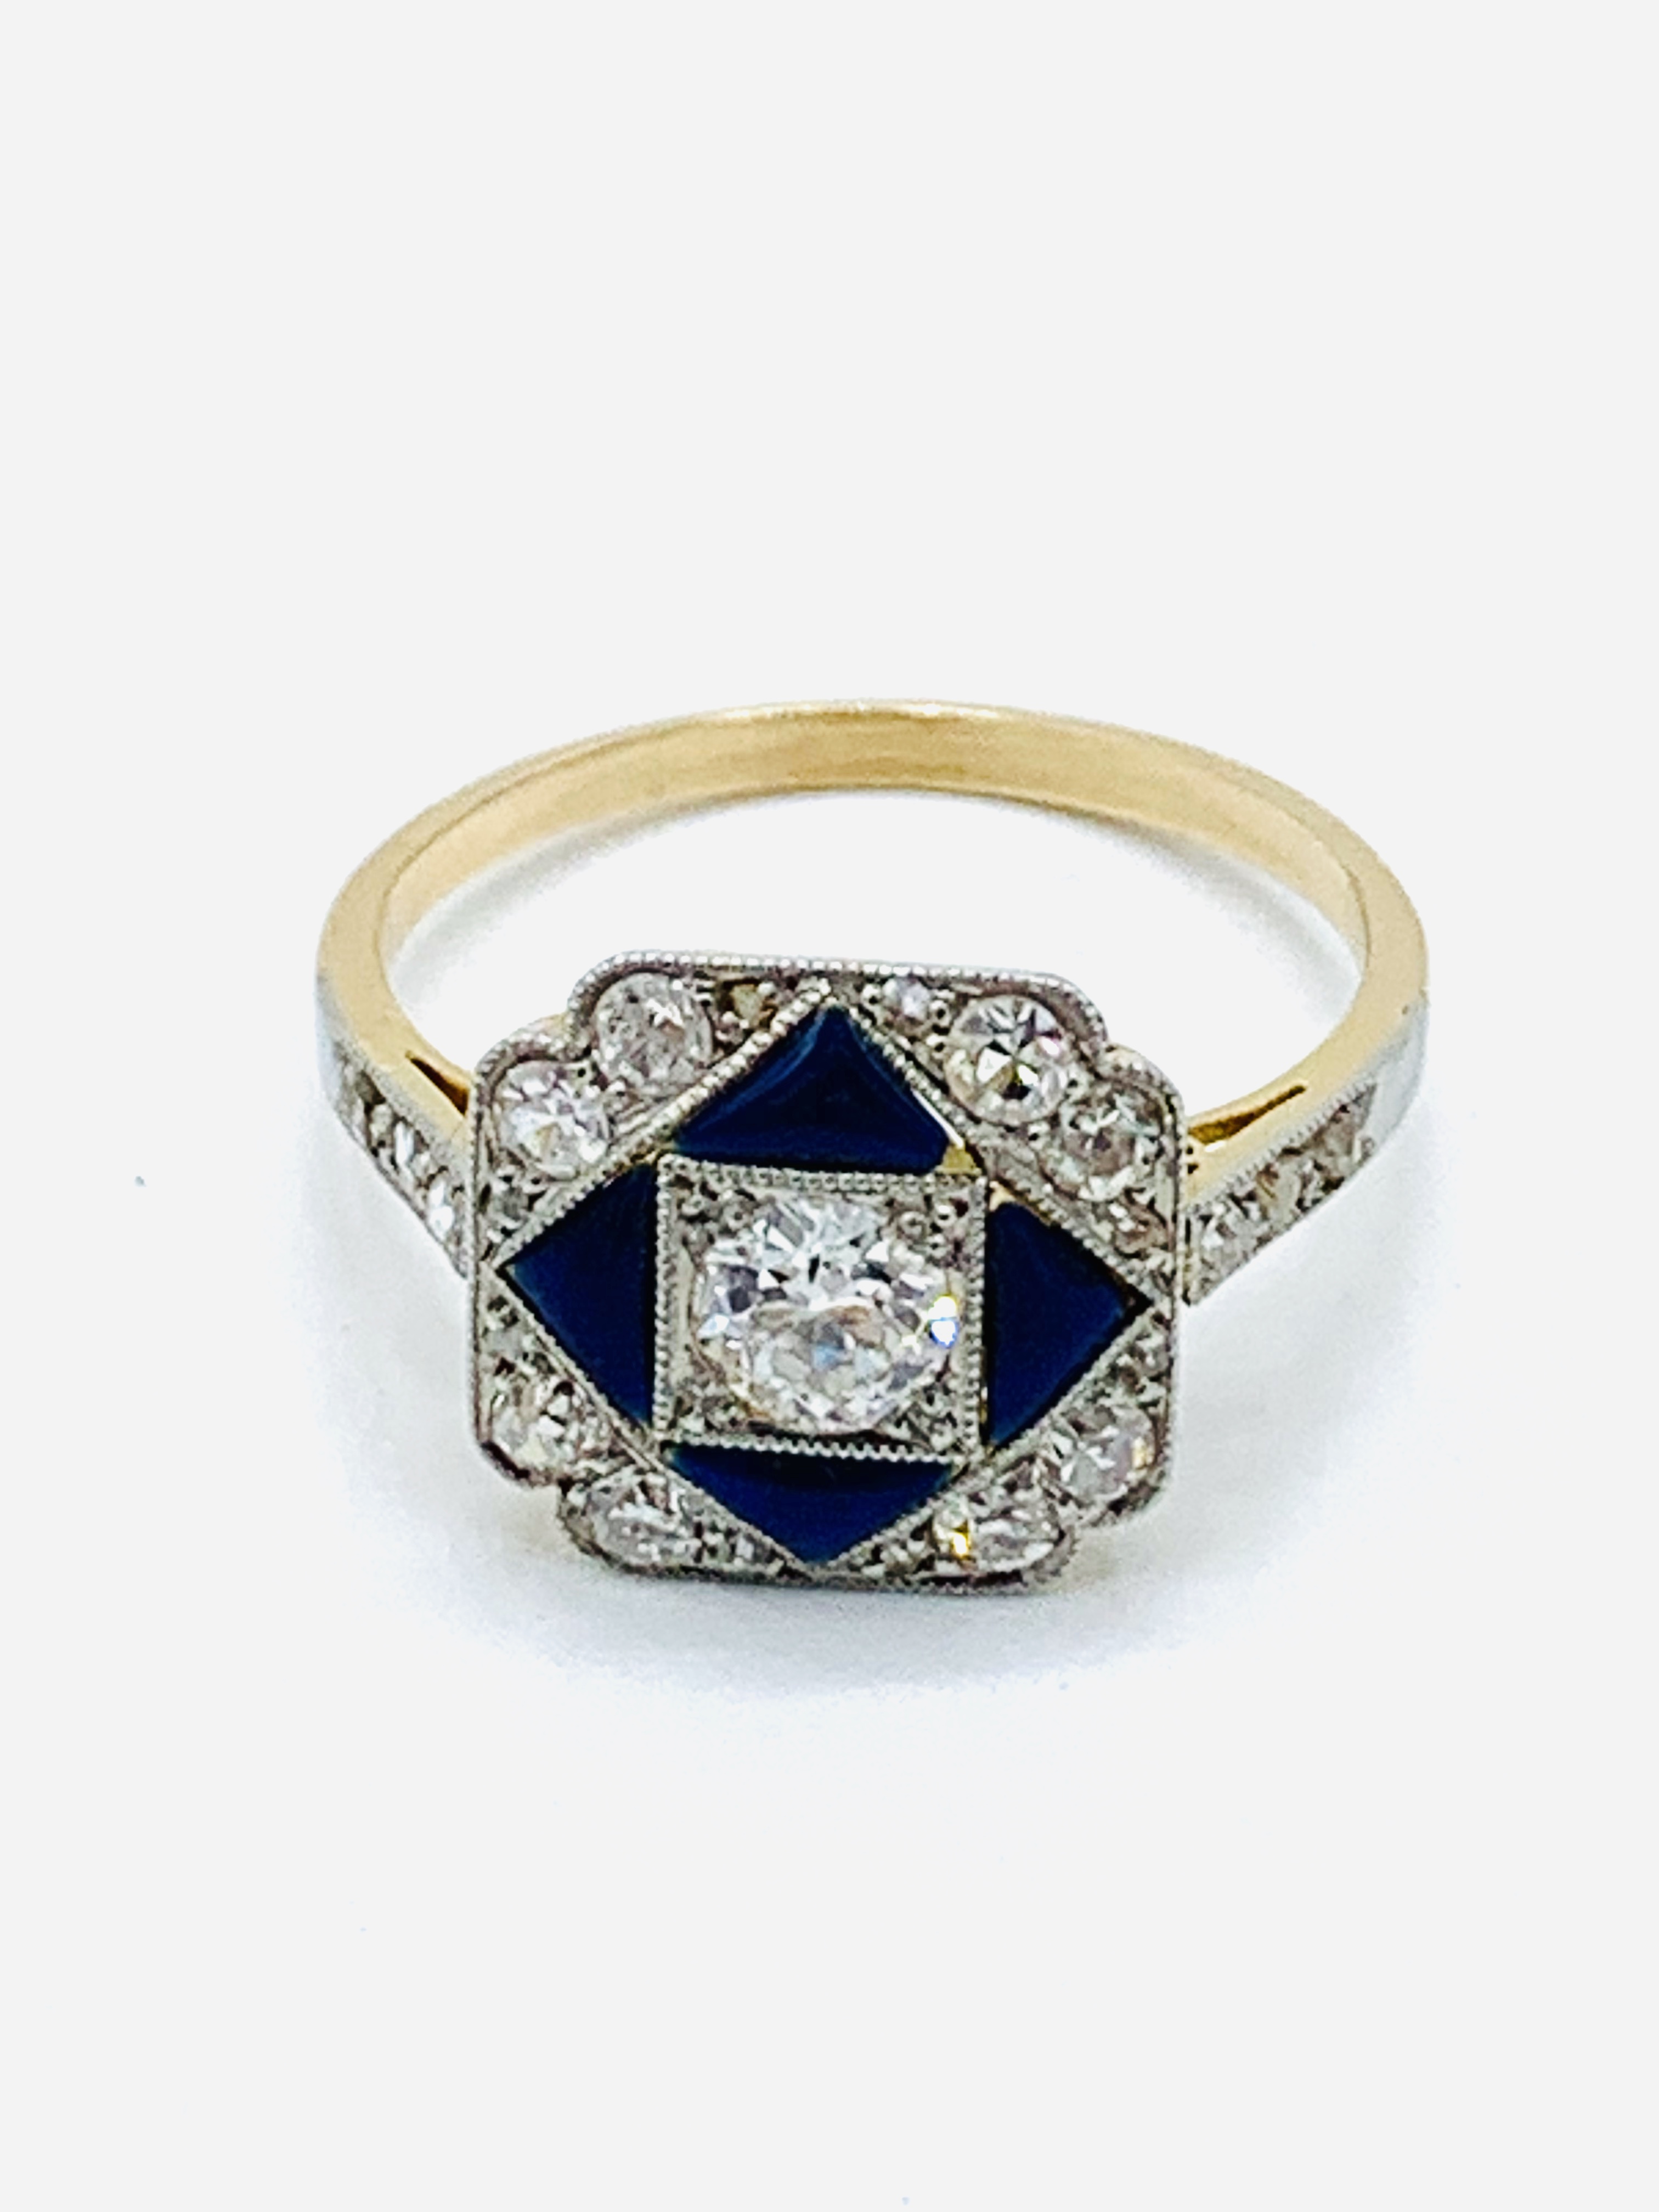 Diamond and blue enamel ring. - Image 9 of 9